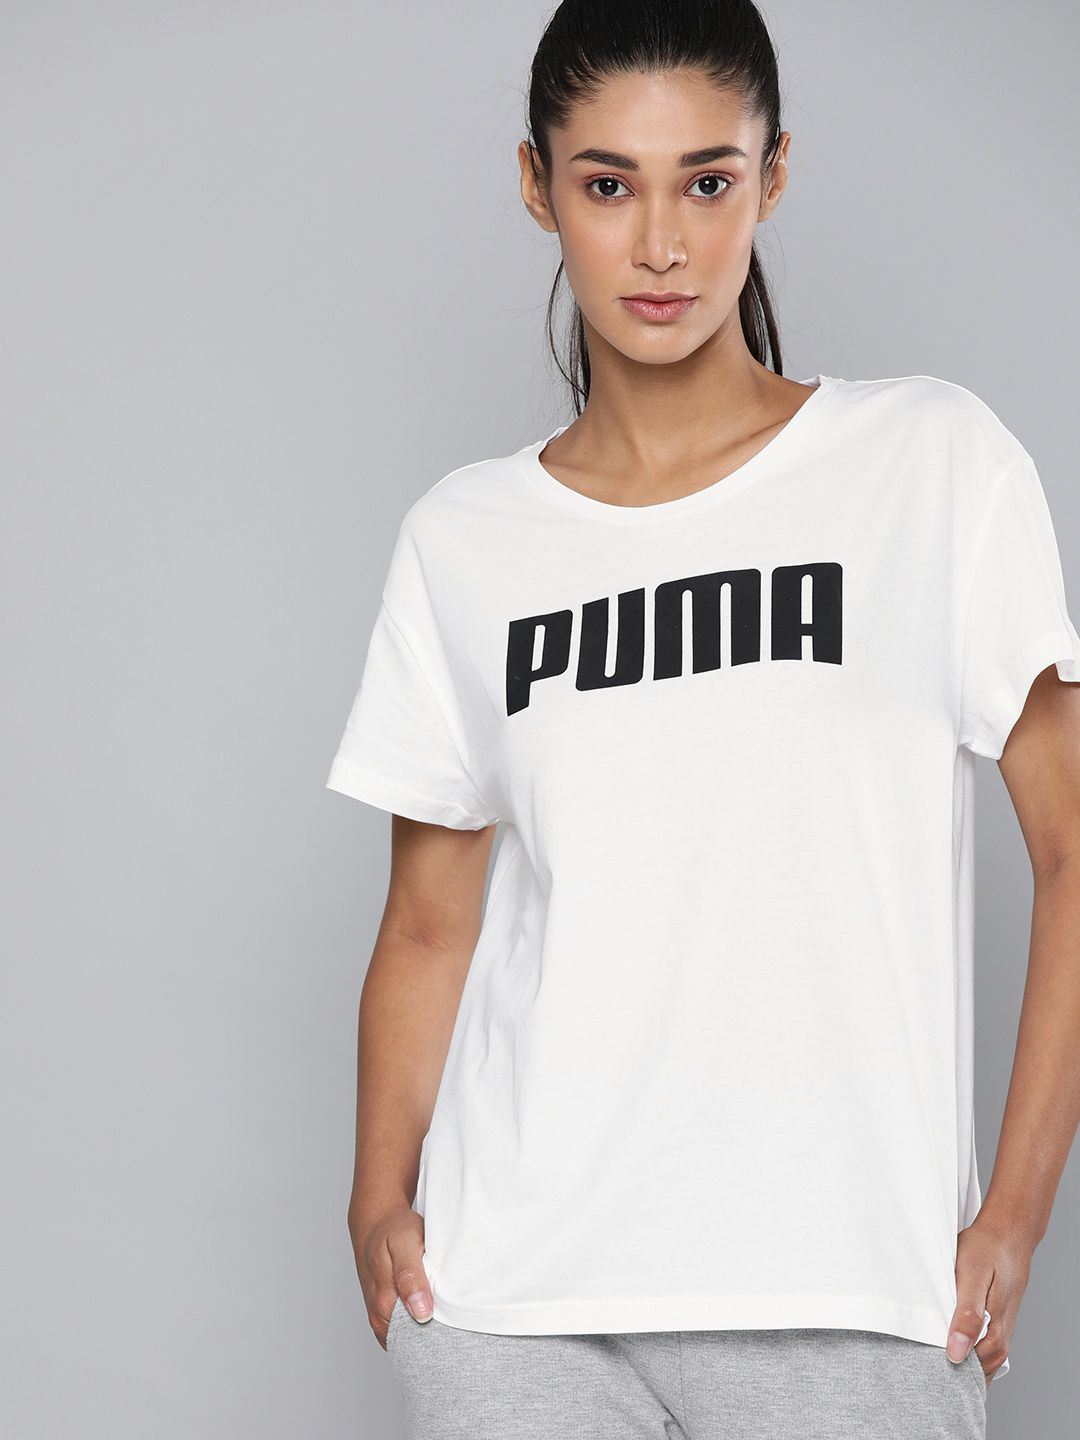 Puma Women White RTG Logo Printed Round Neck T-shirt Price in India